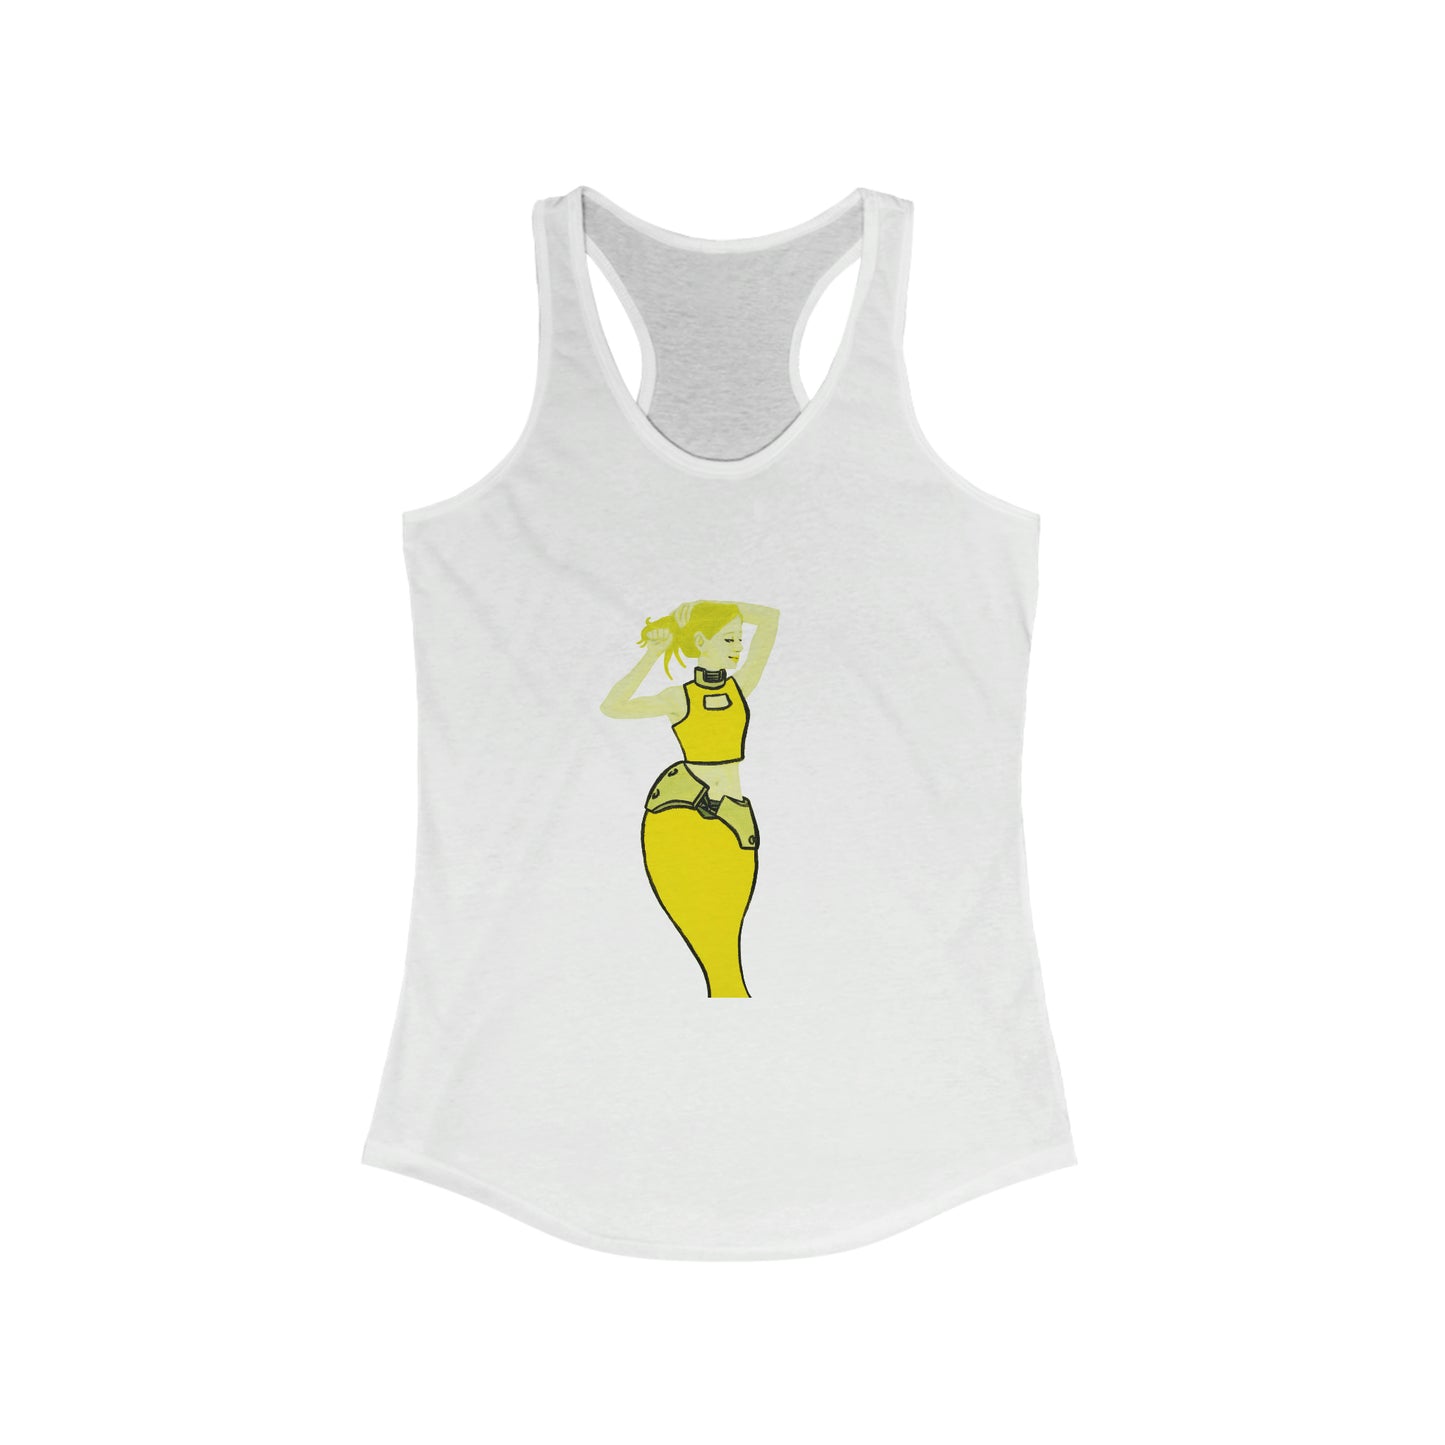 "The MODels" - C.P. Cadmium Yellow Female - Standalone Figure - Women's Ideal Racerback Tank